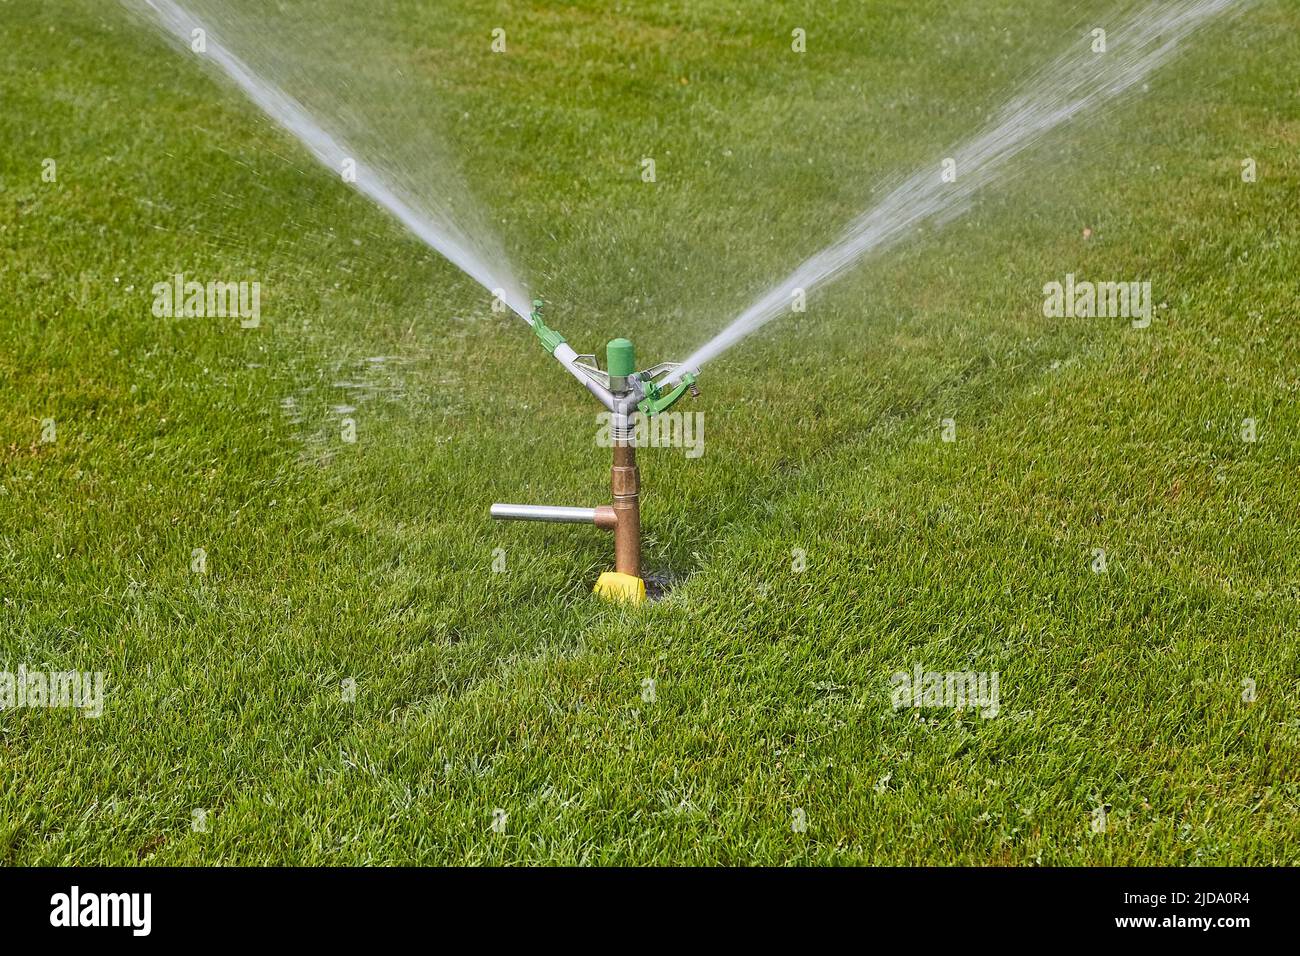 Garden sprinkler watering Stock Photo